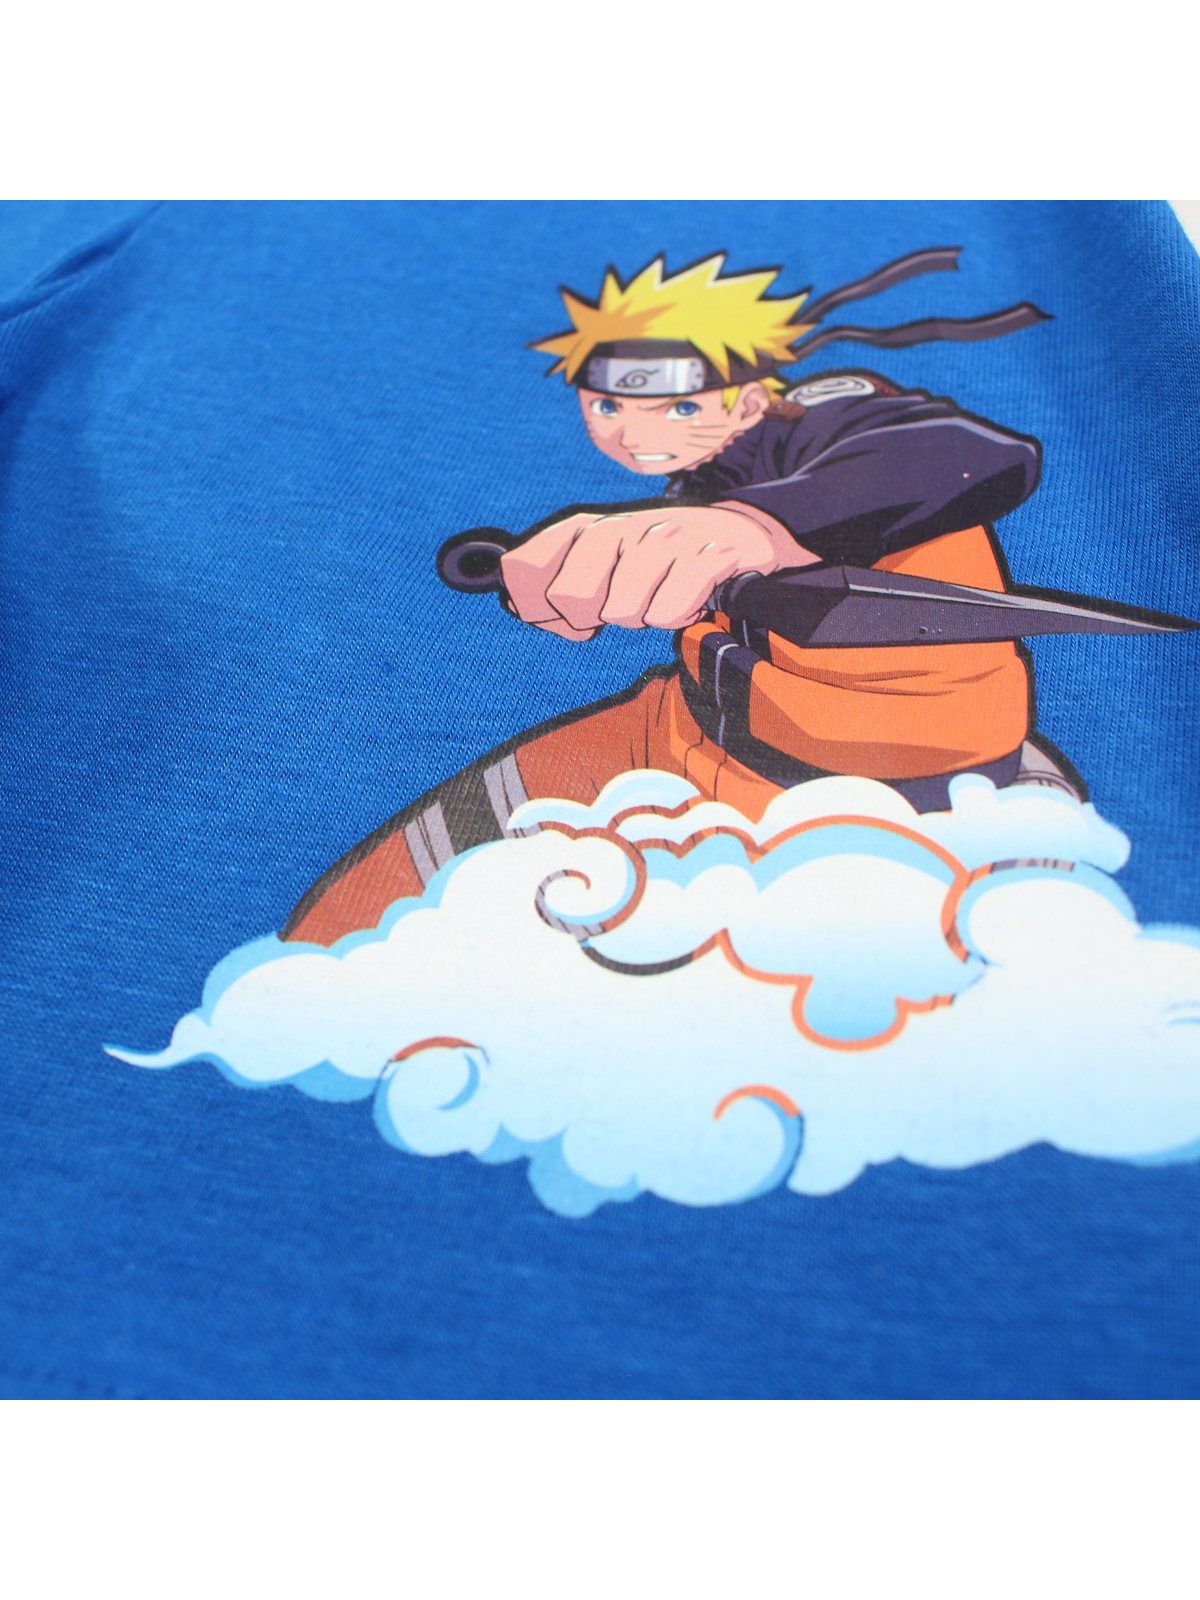 Insieme di Naruto.